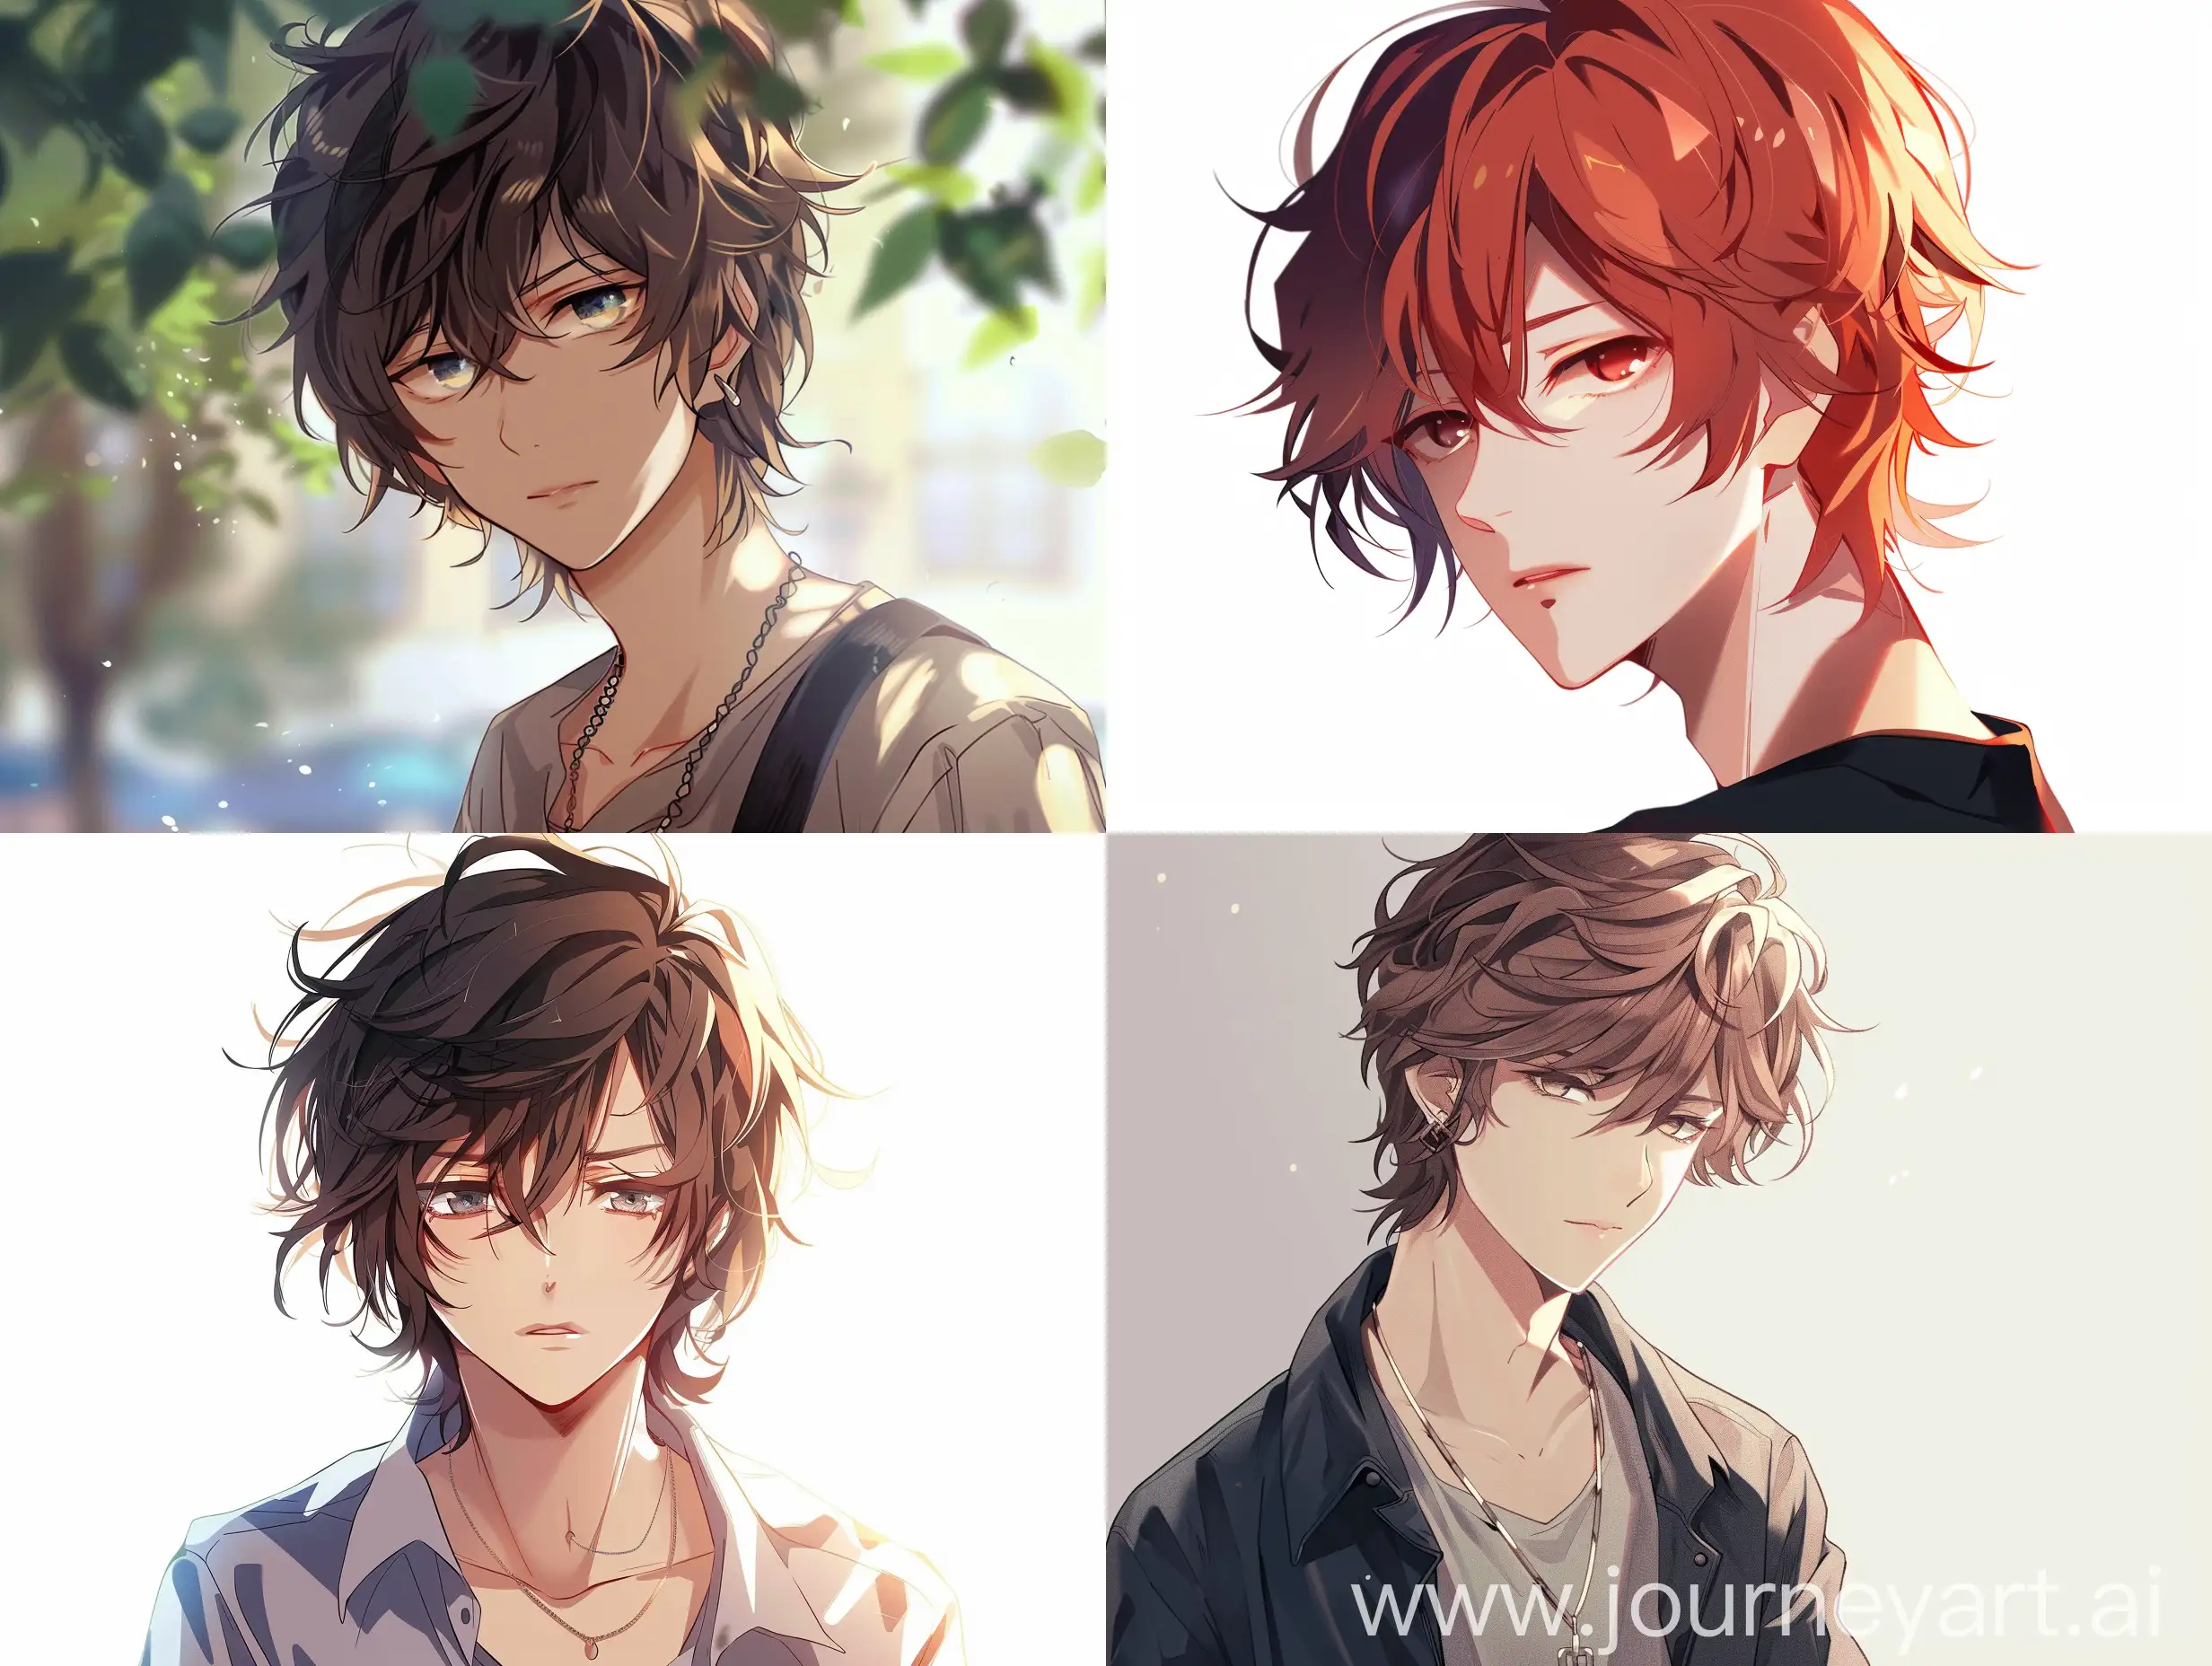 Handsome-Anime-Boy-Portrait-with-Vibrant-Colors